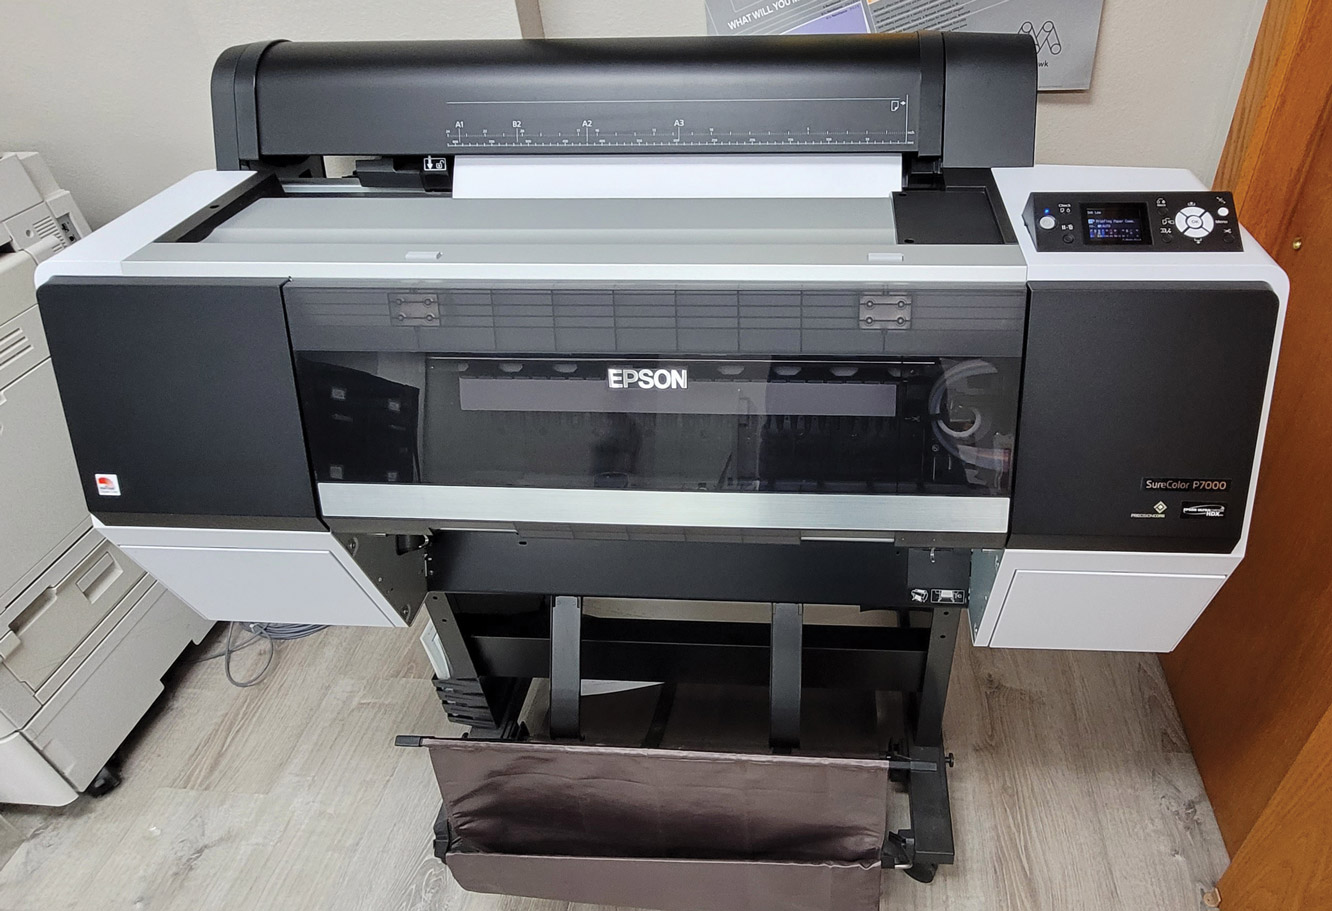 Epson SureColor P7000 wide format printer